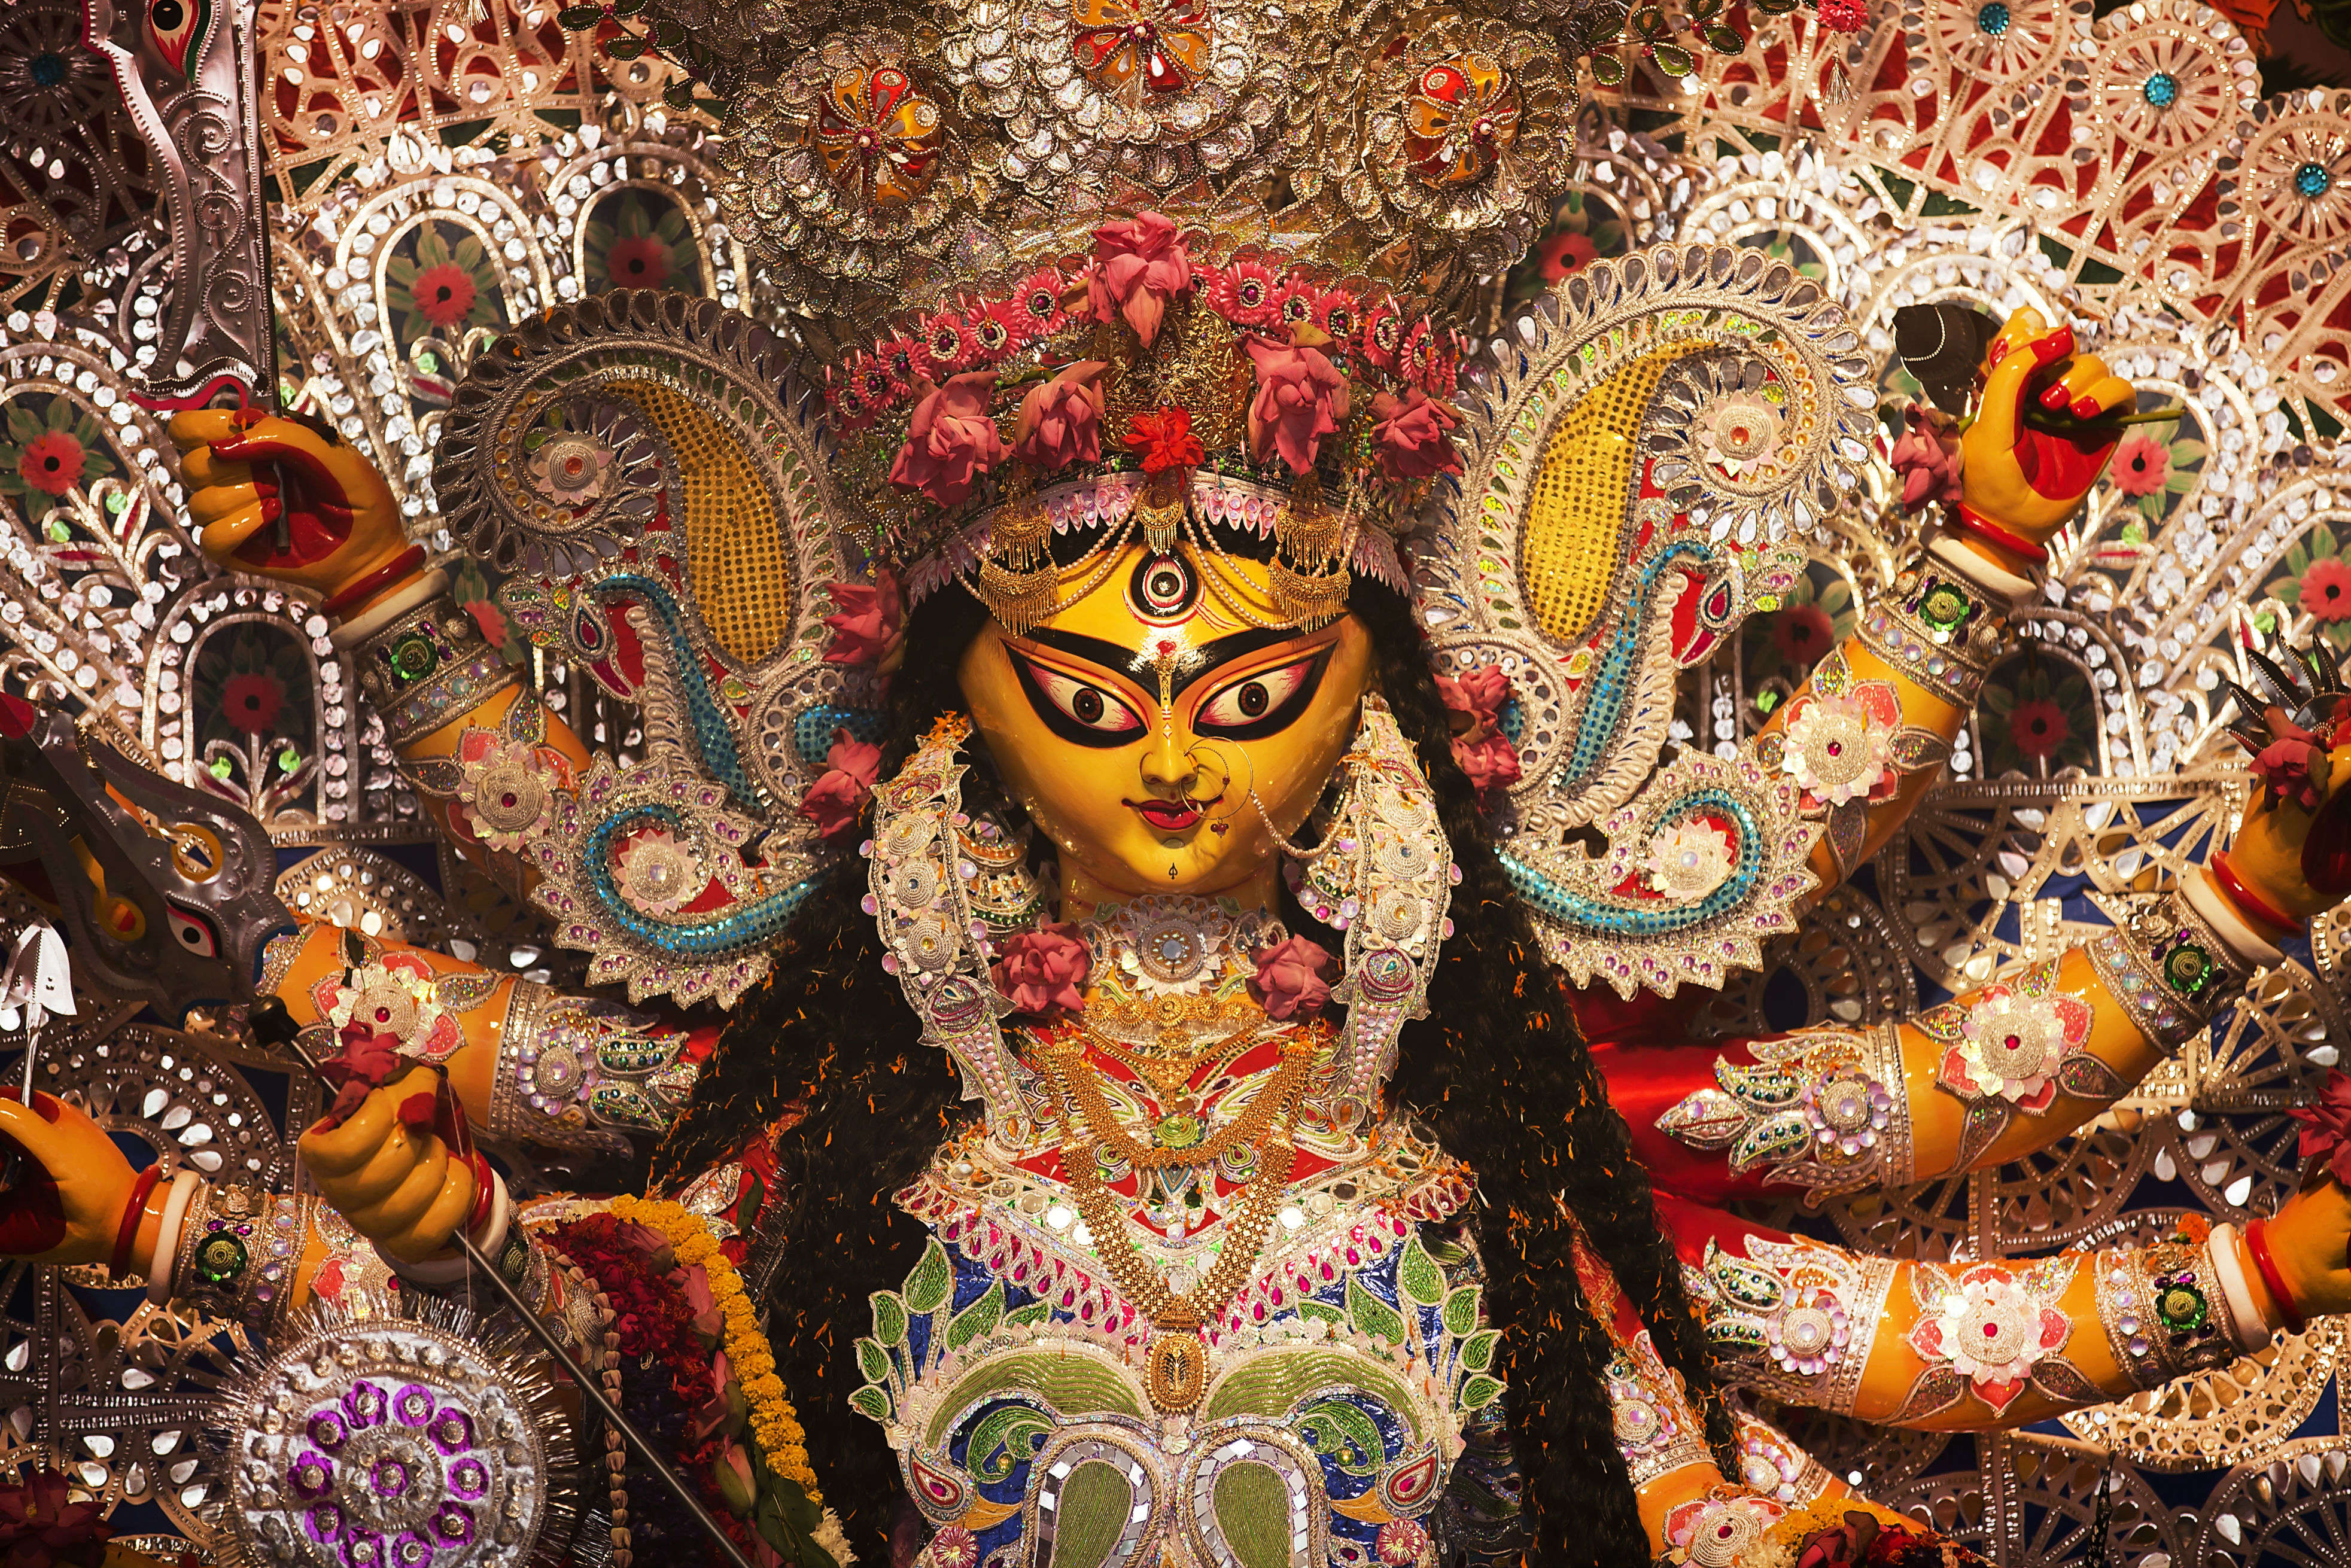 North Kolkata Durga Puja 2018 Durga Puja Celebration in North Kolkata